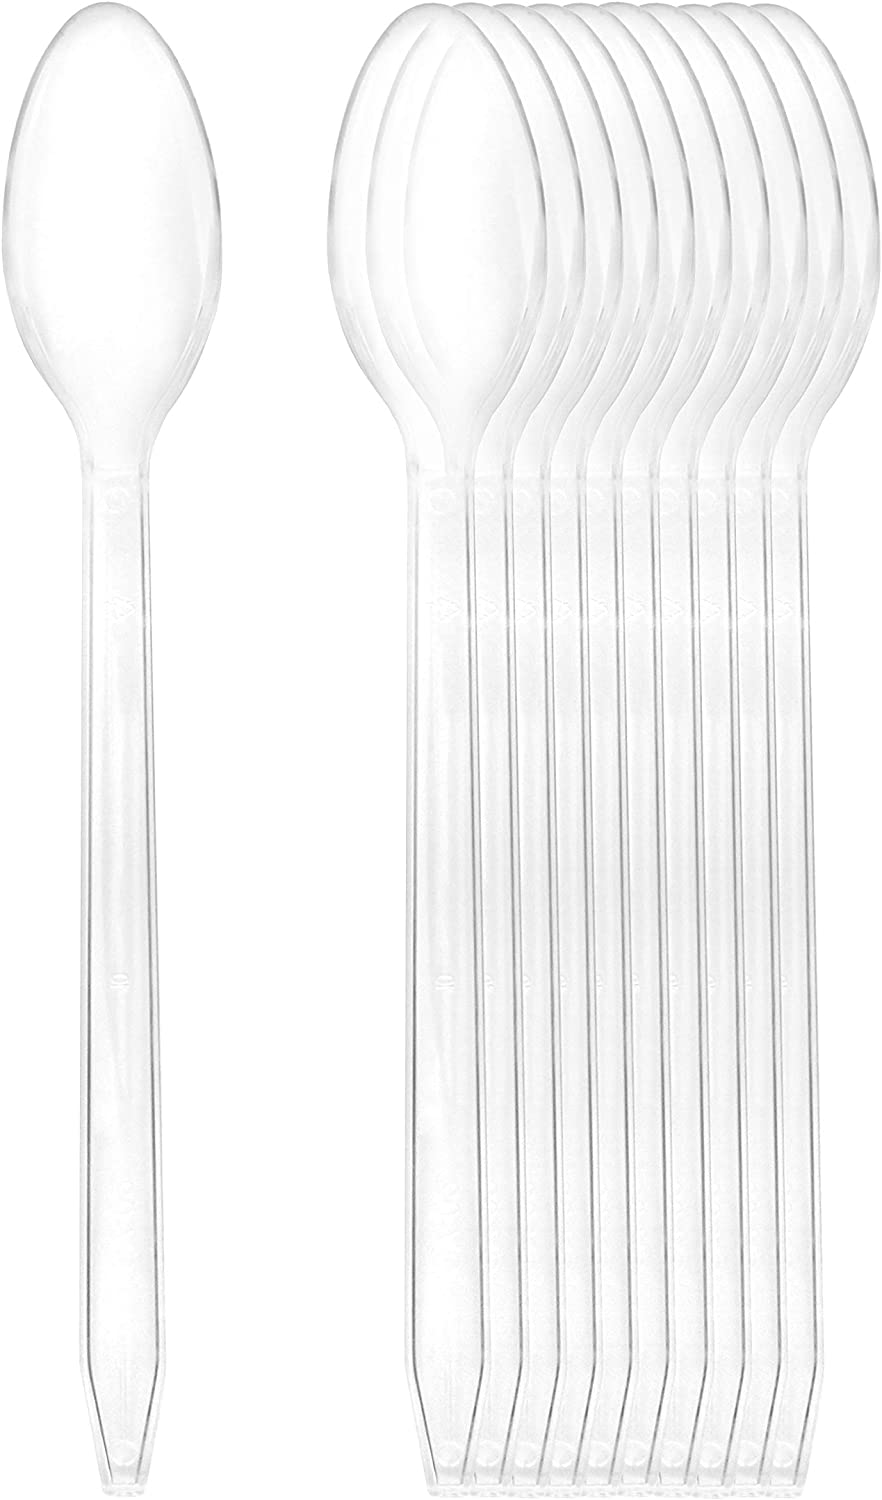 Plastic Ice Cream Spoons Long-Handled (100-Pack) - sh1542cb0SPOON